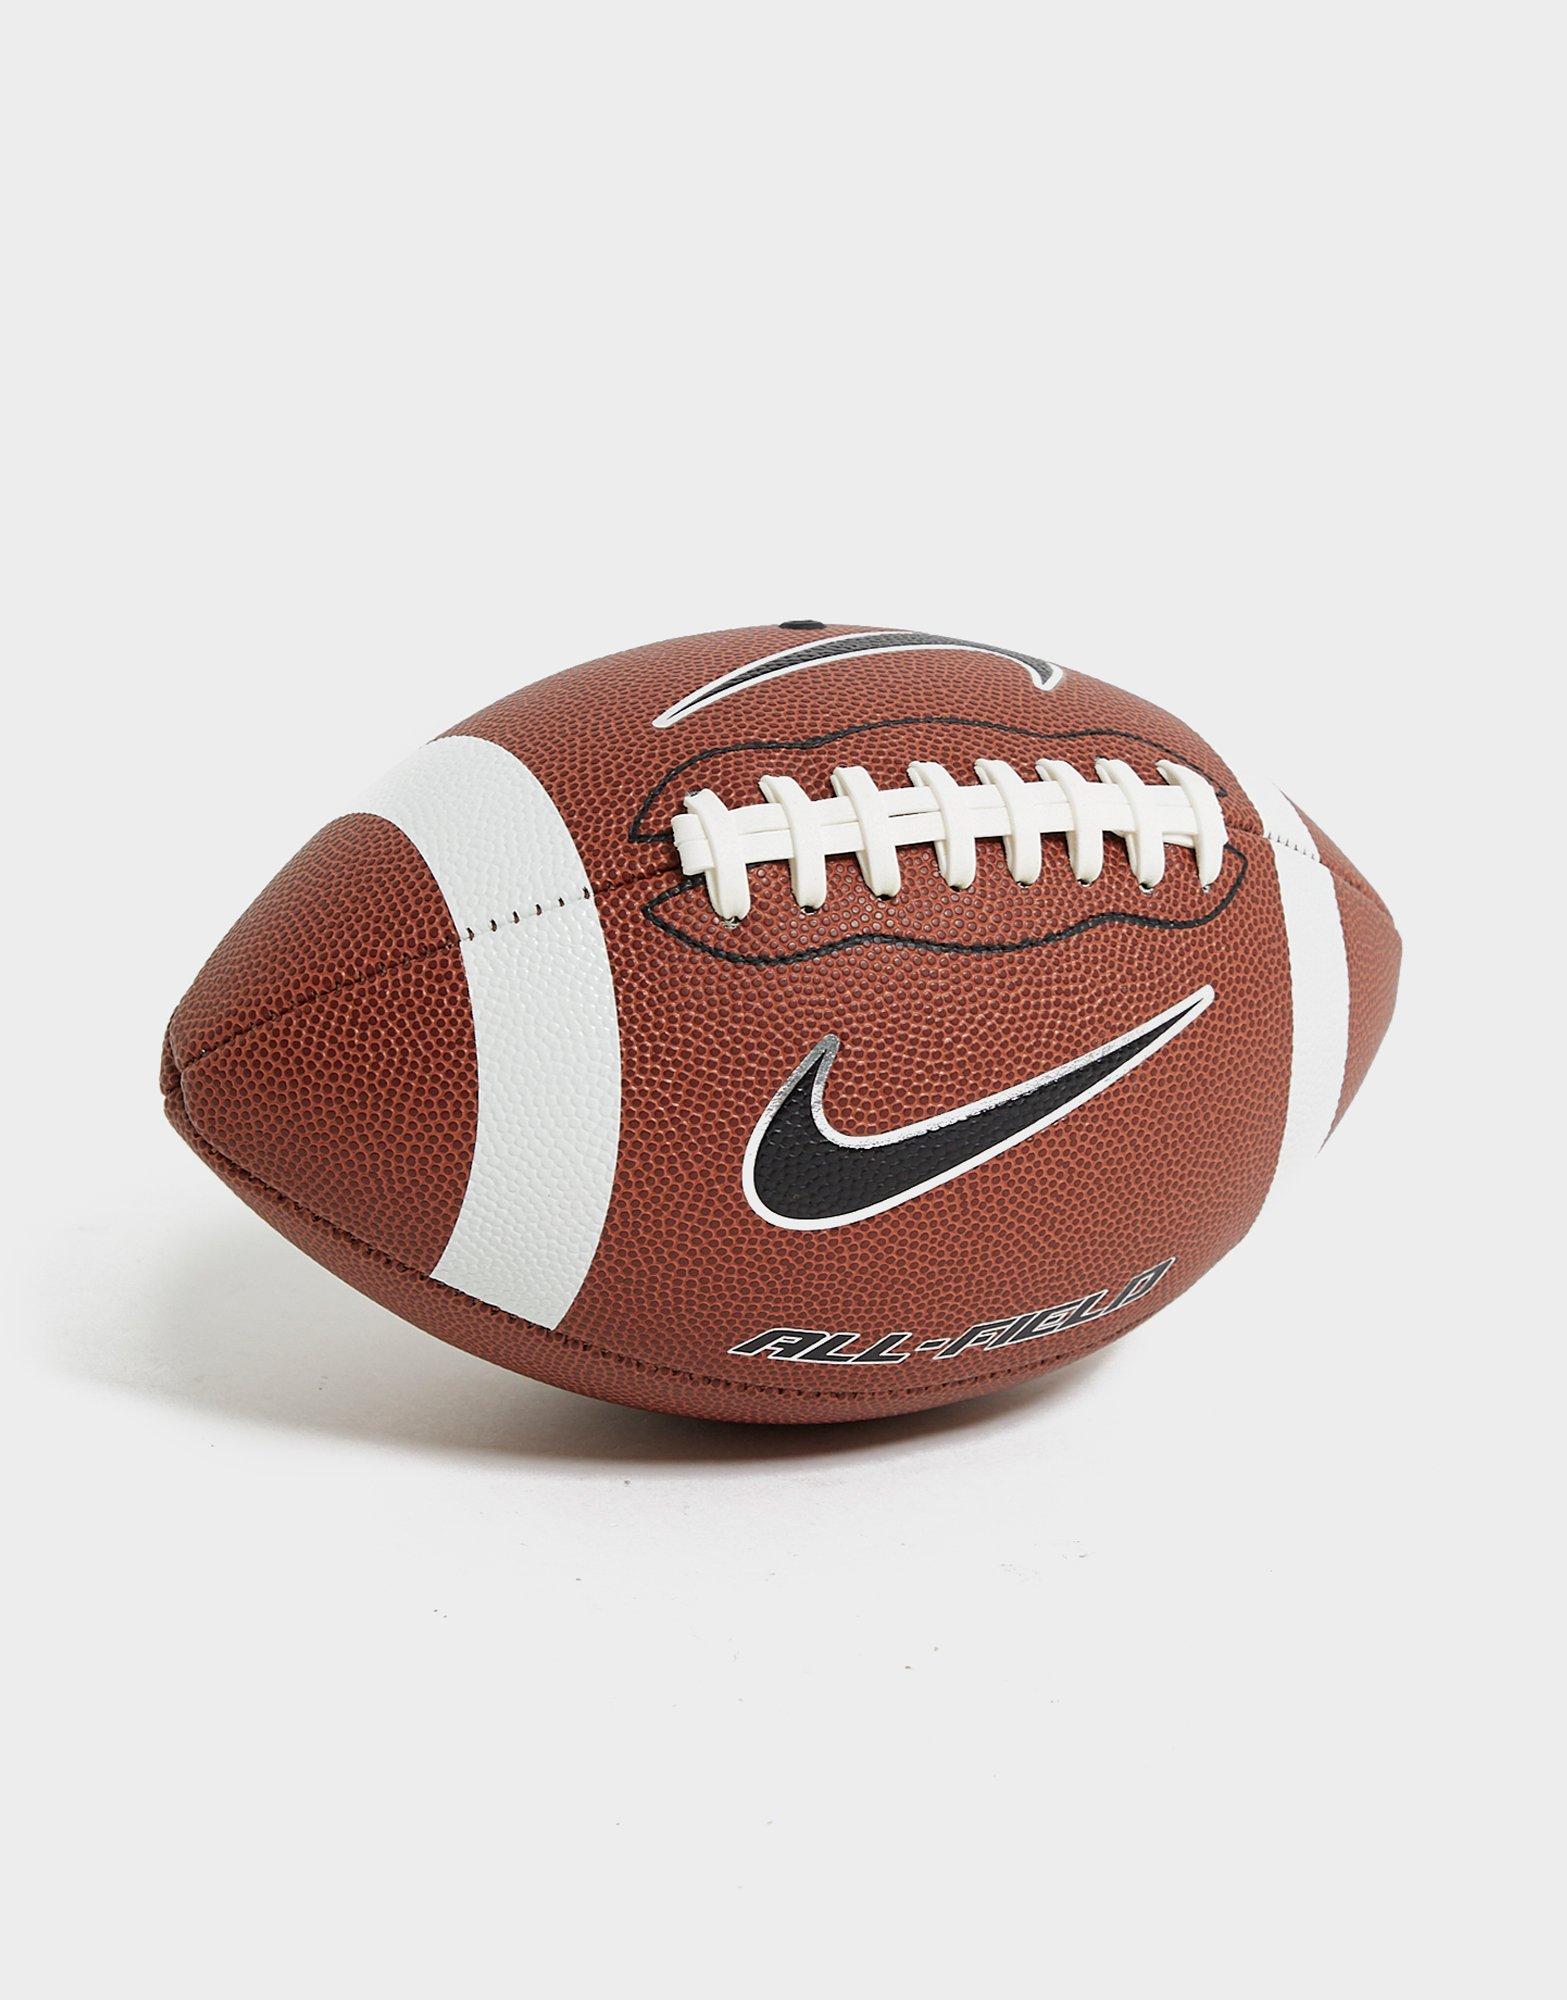 Acquista Nike NFL All Field Pallone football americano